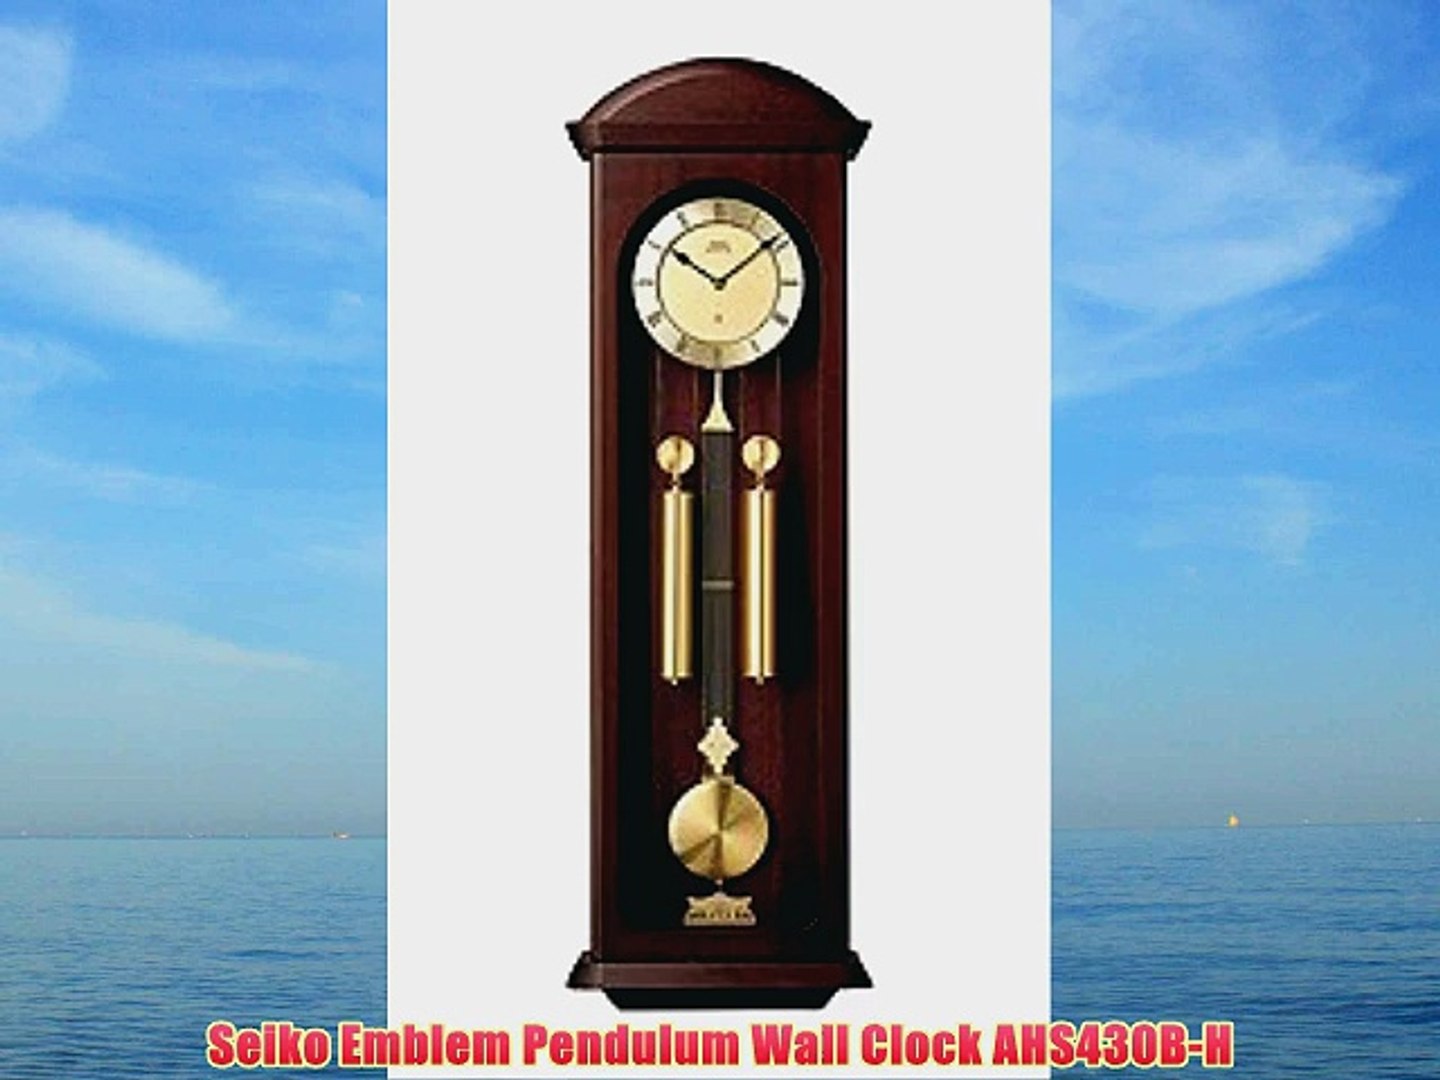 Seiko Emblem Pendulum Wall Clock AHS430B-H - video Dailymotion